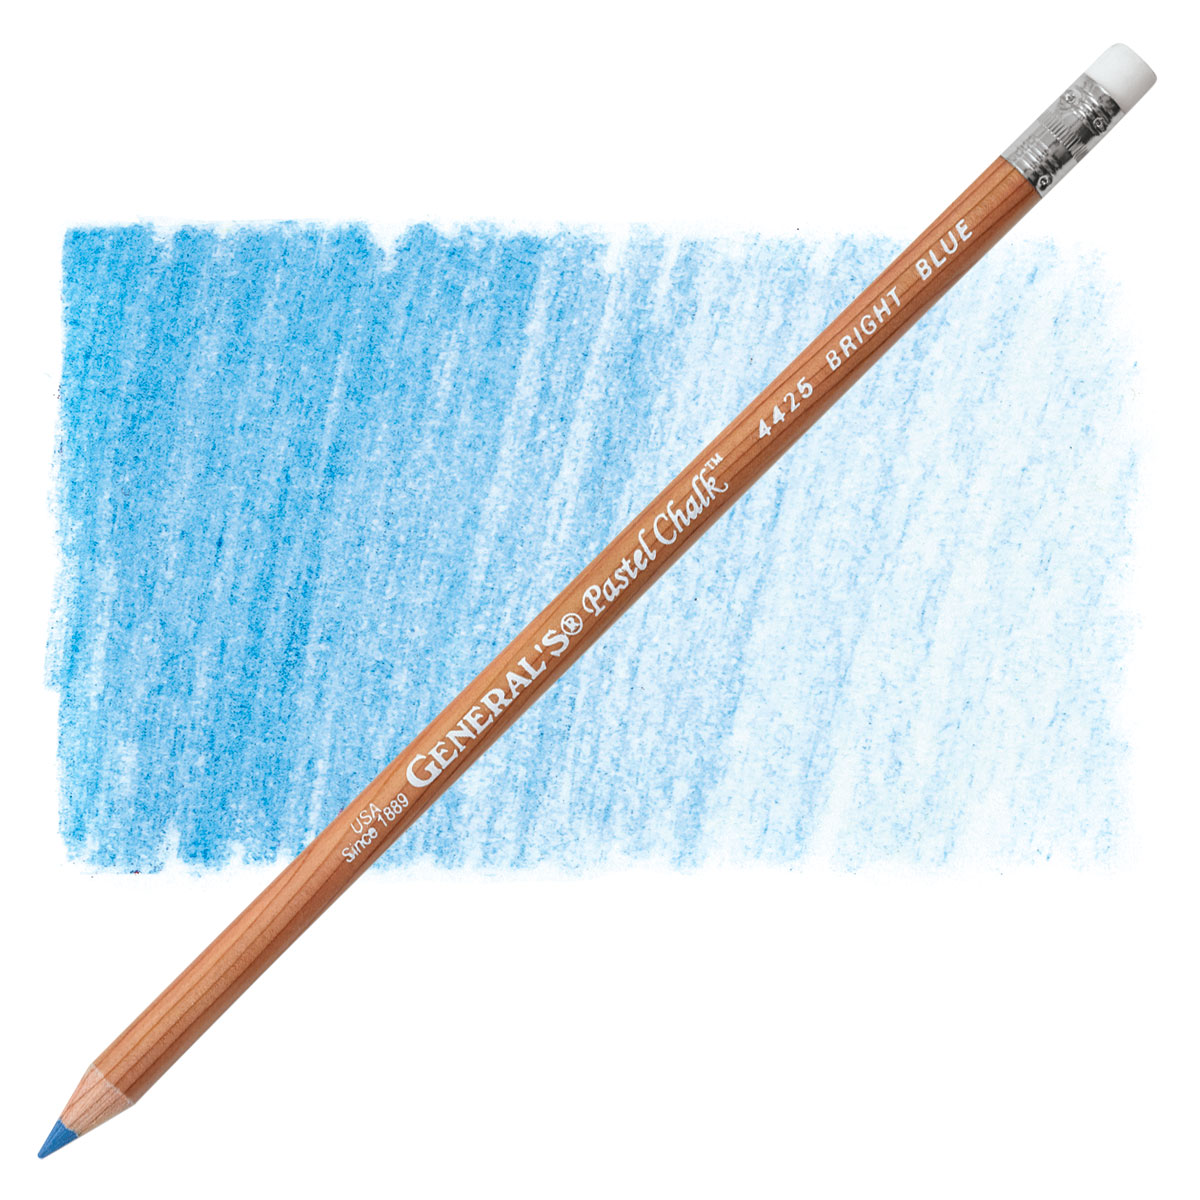 General's Pastel Chalk Pencil Bulk Light Grey, 1 - Kroger